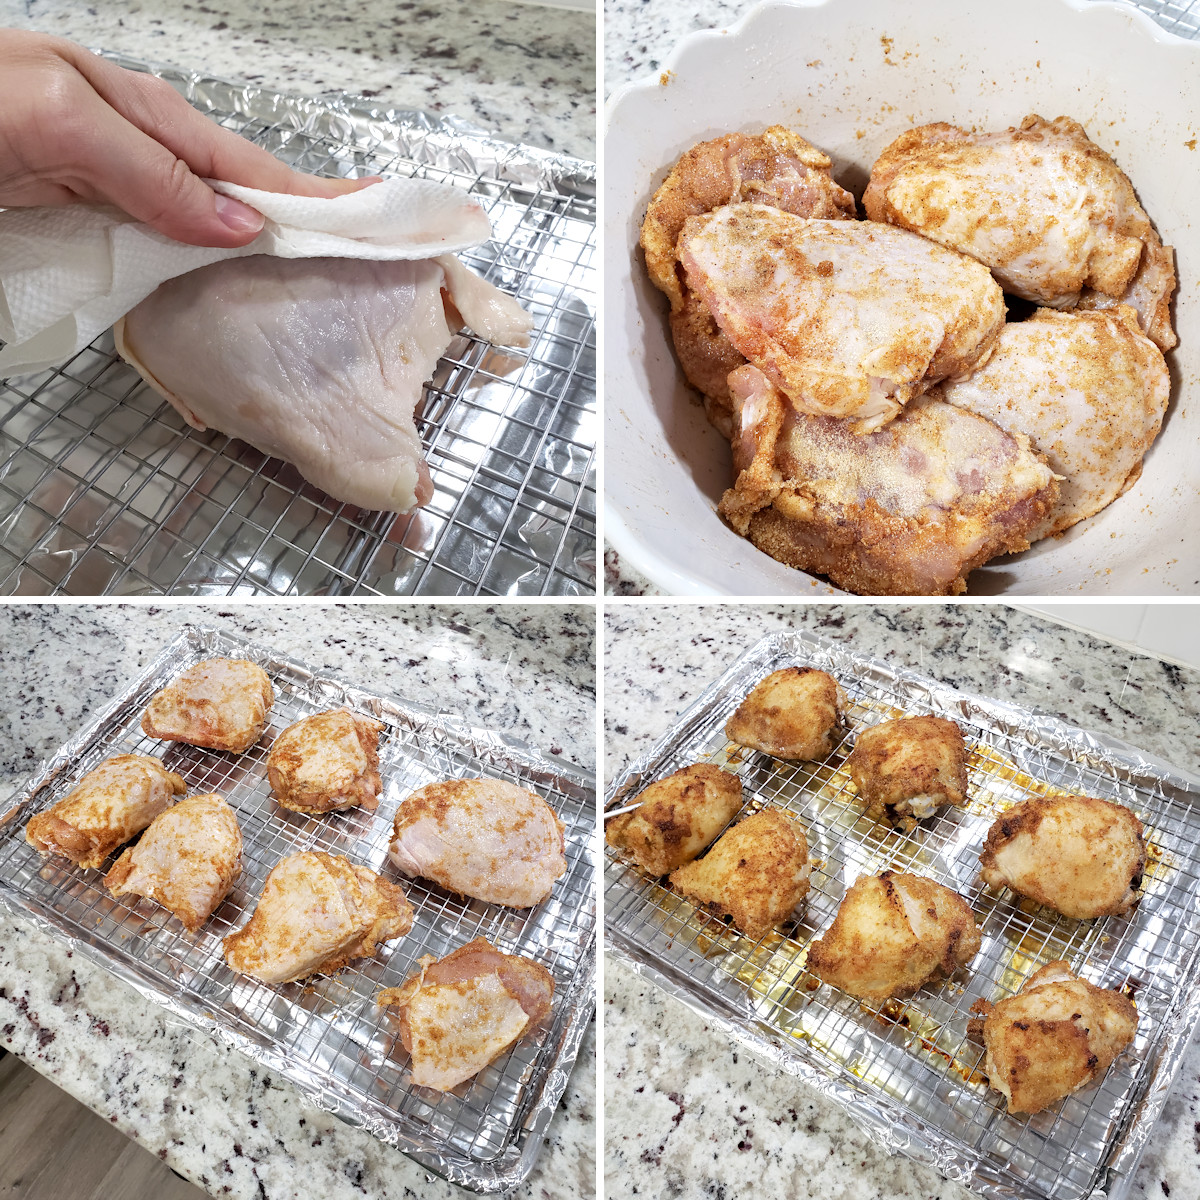 Preparing chicken thighs on a baking sheet.